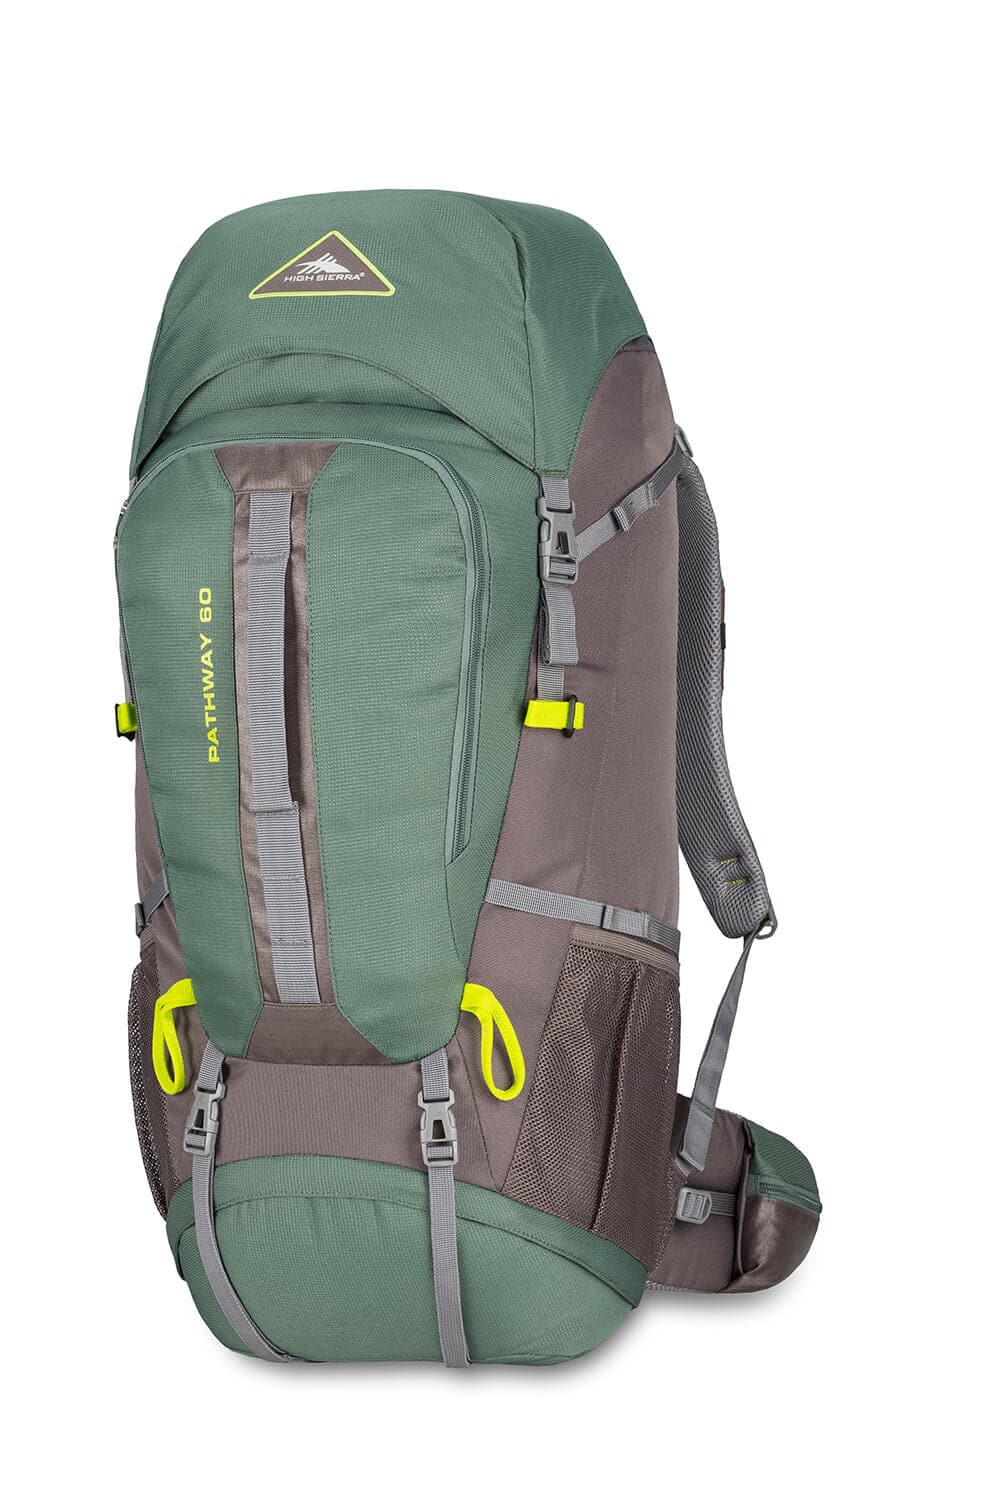 High Sierra Pathway Frame Packs 60L Backpack